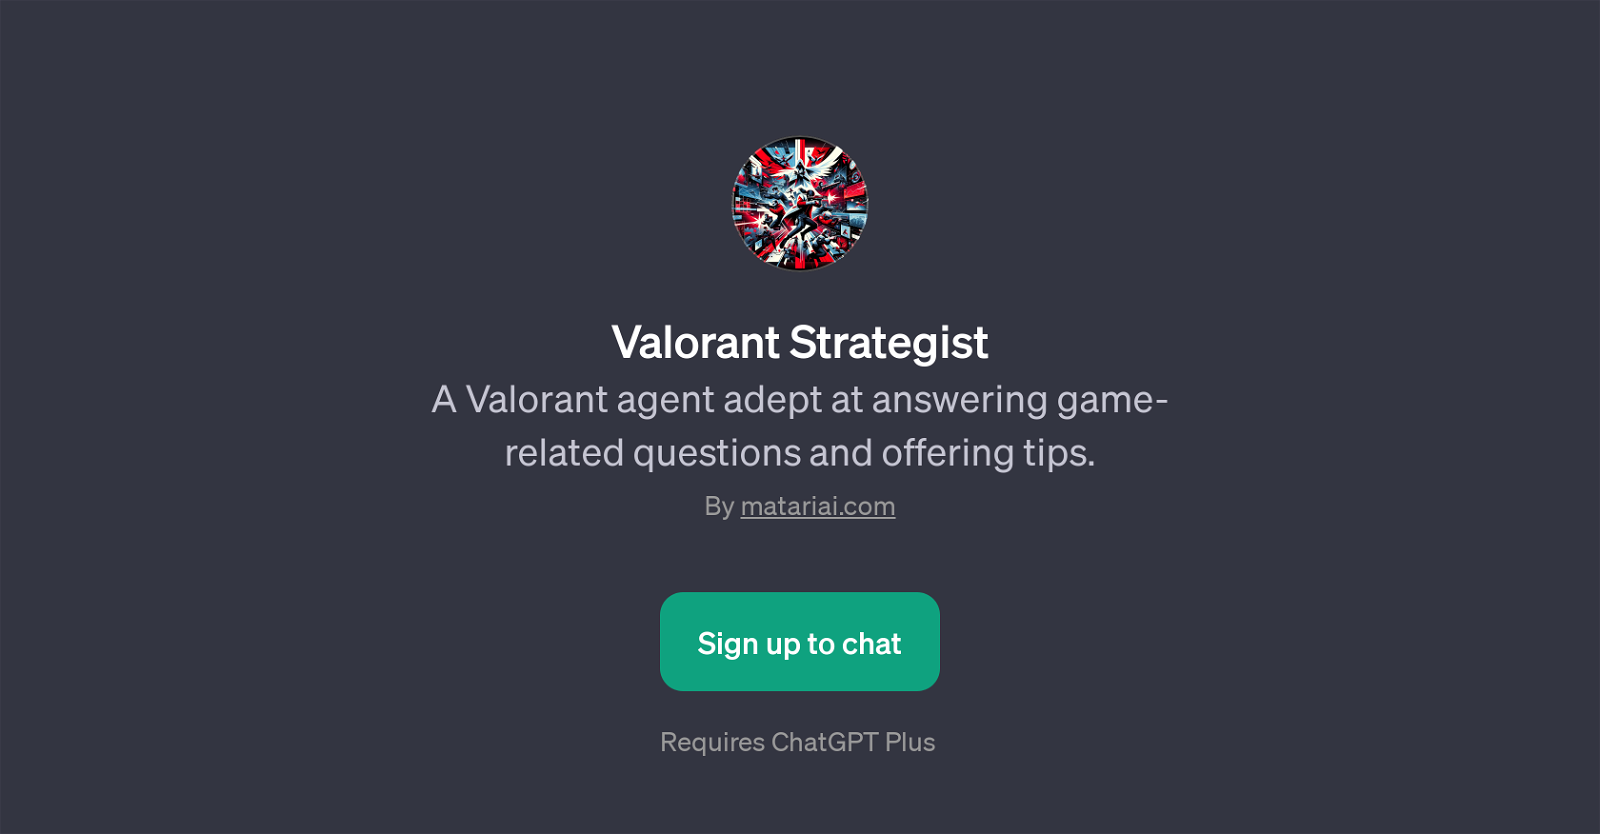 Valorant Strategist website